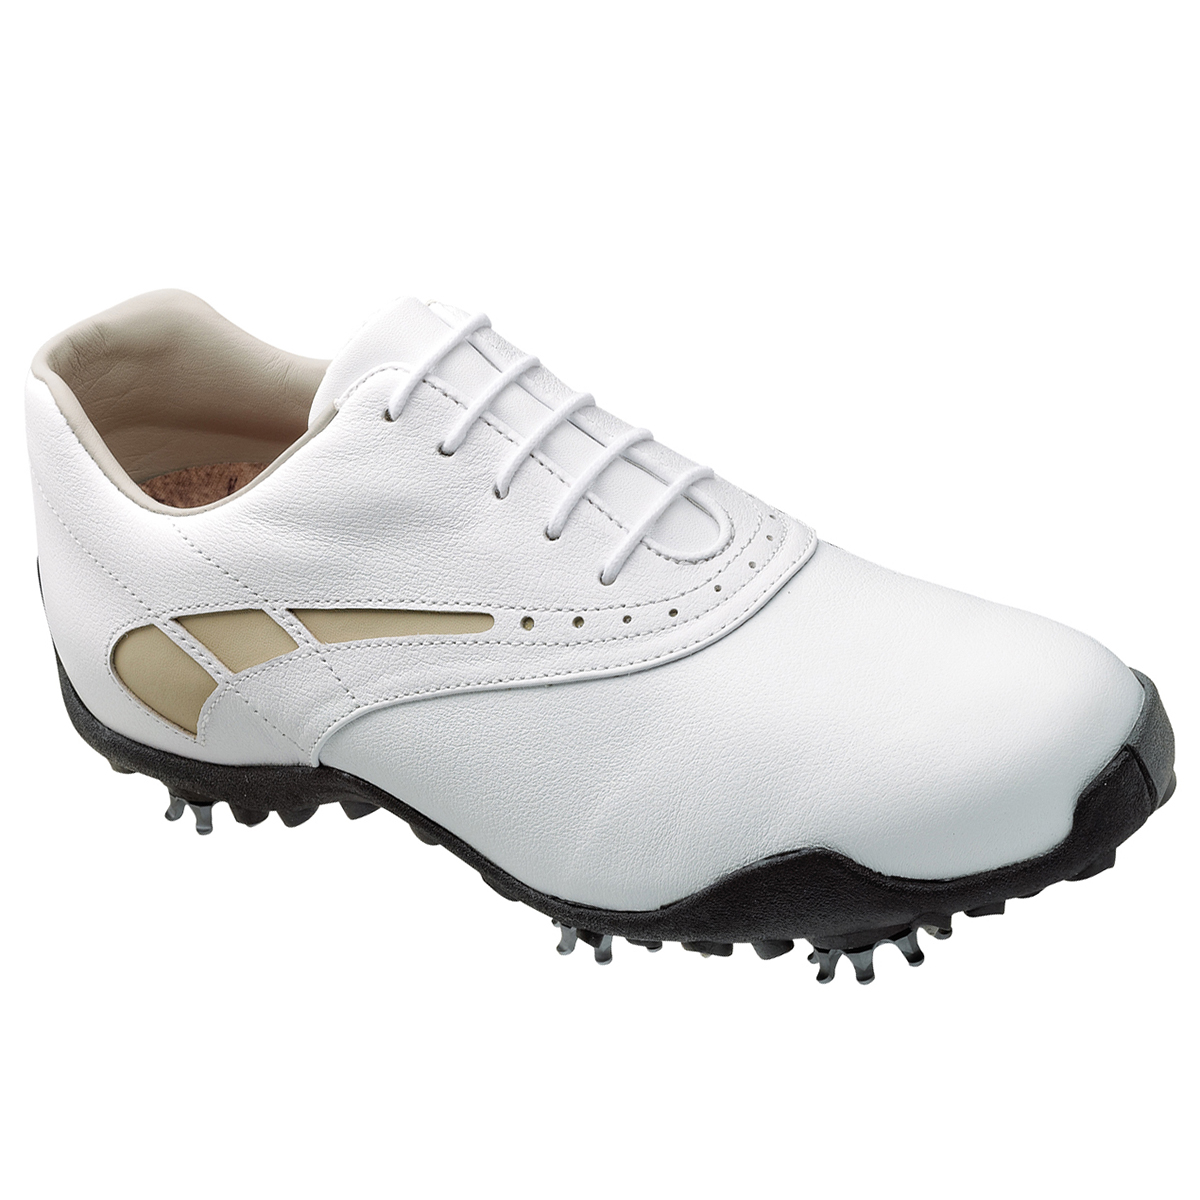 footjoy lopro mens golf shoes